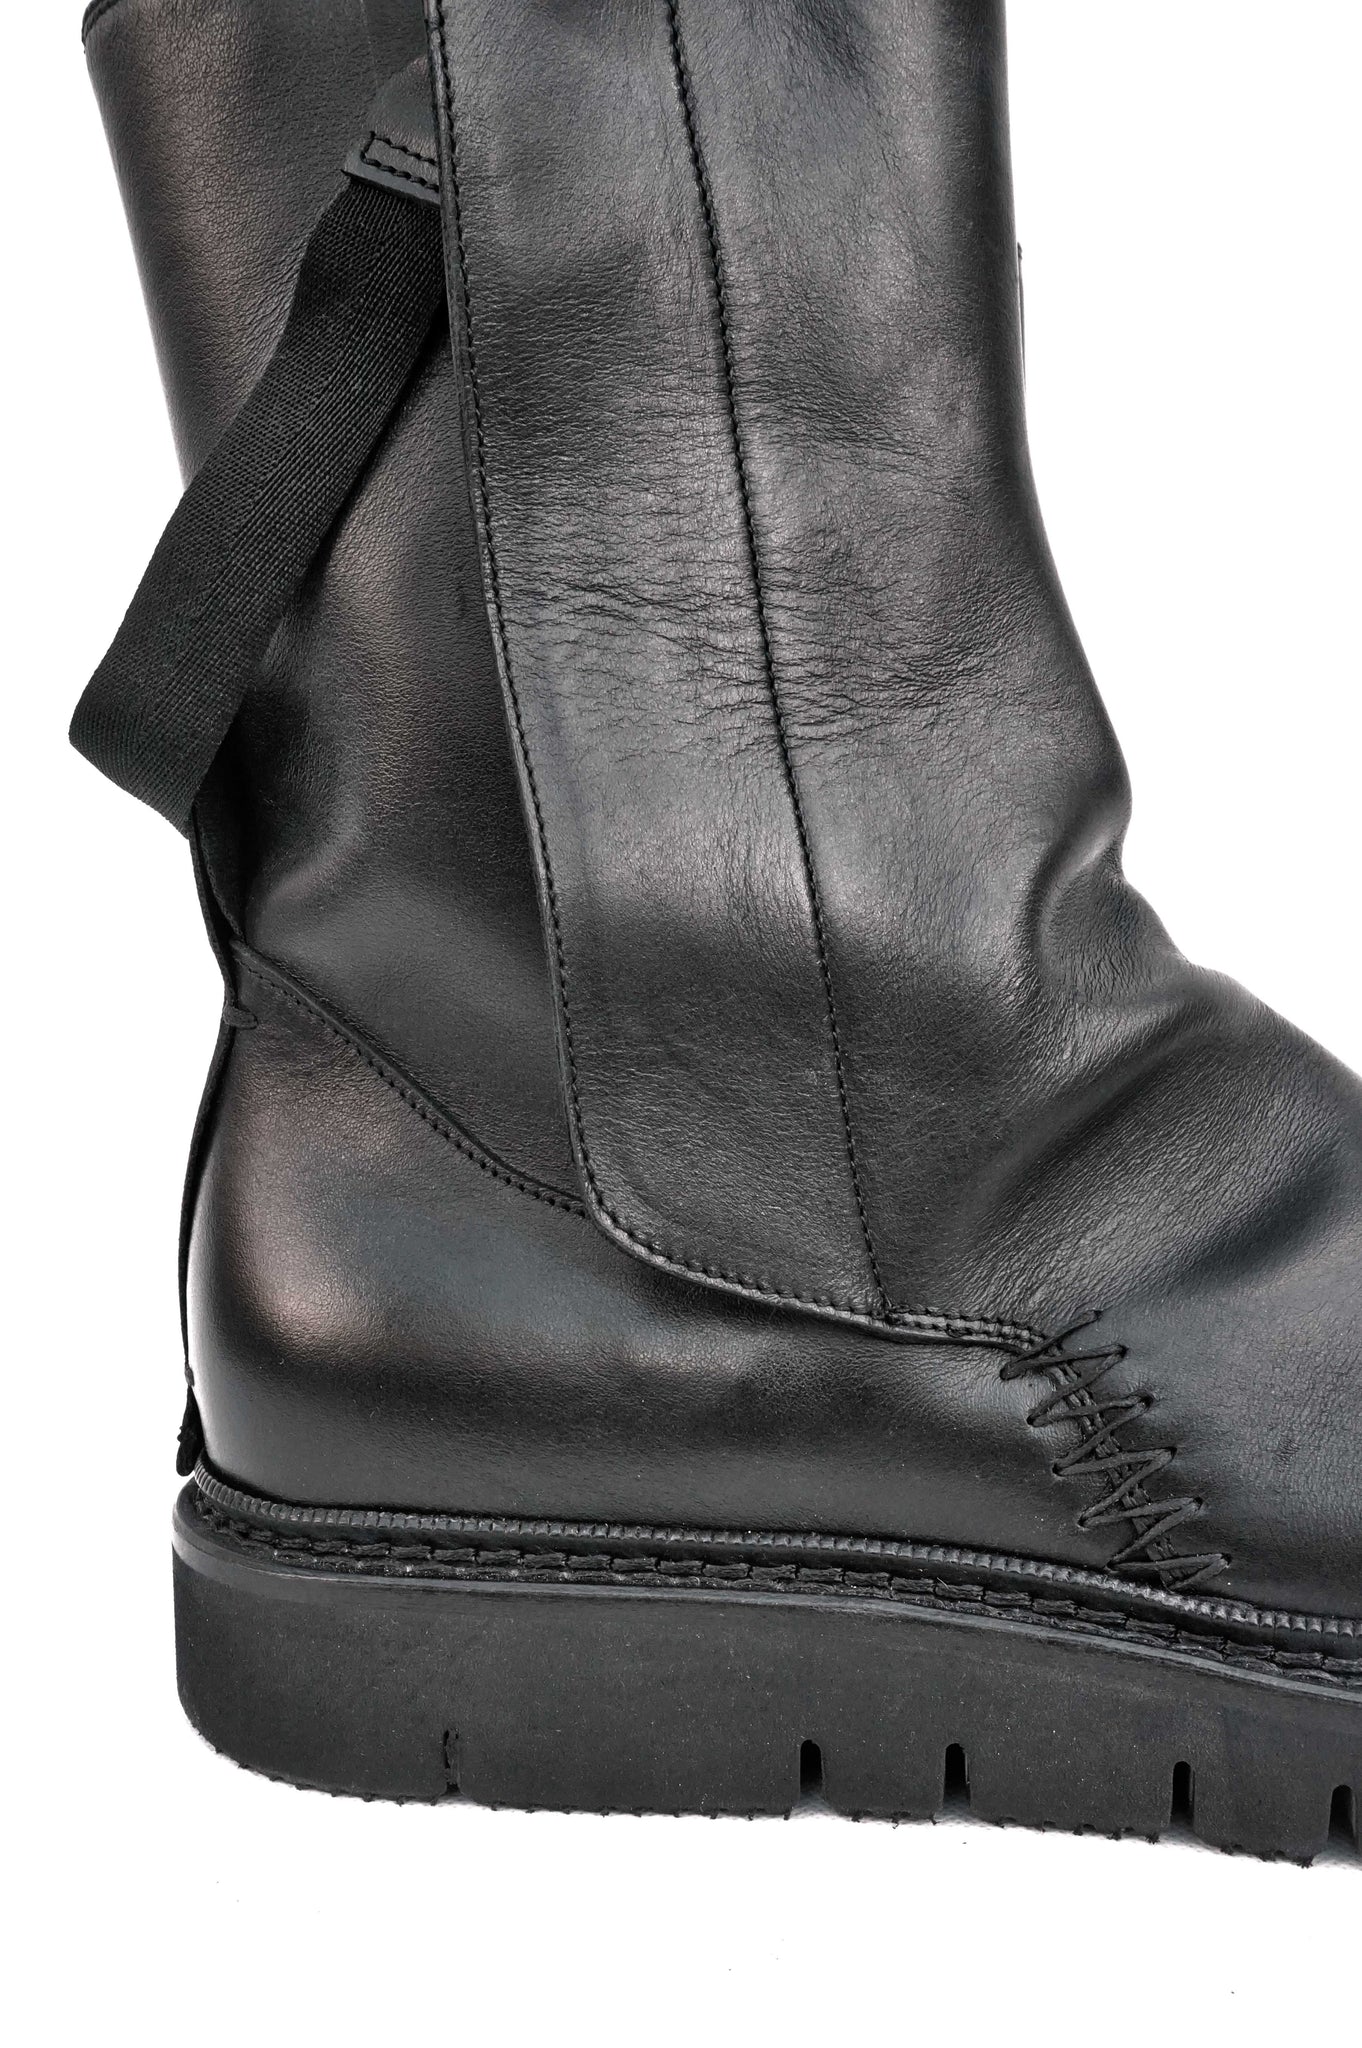 adddress leather boot